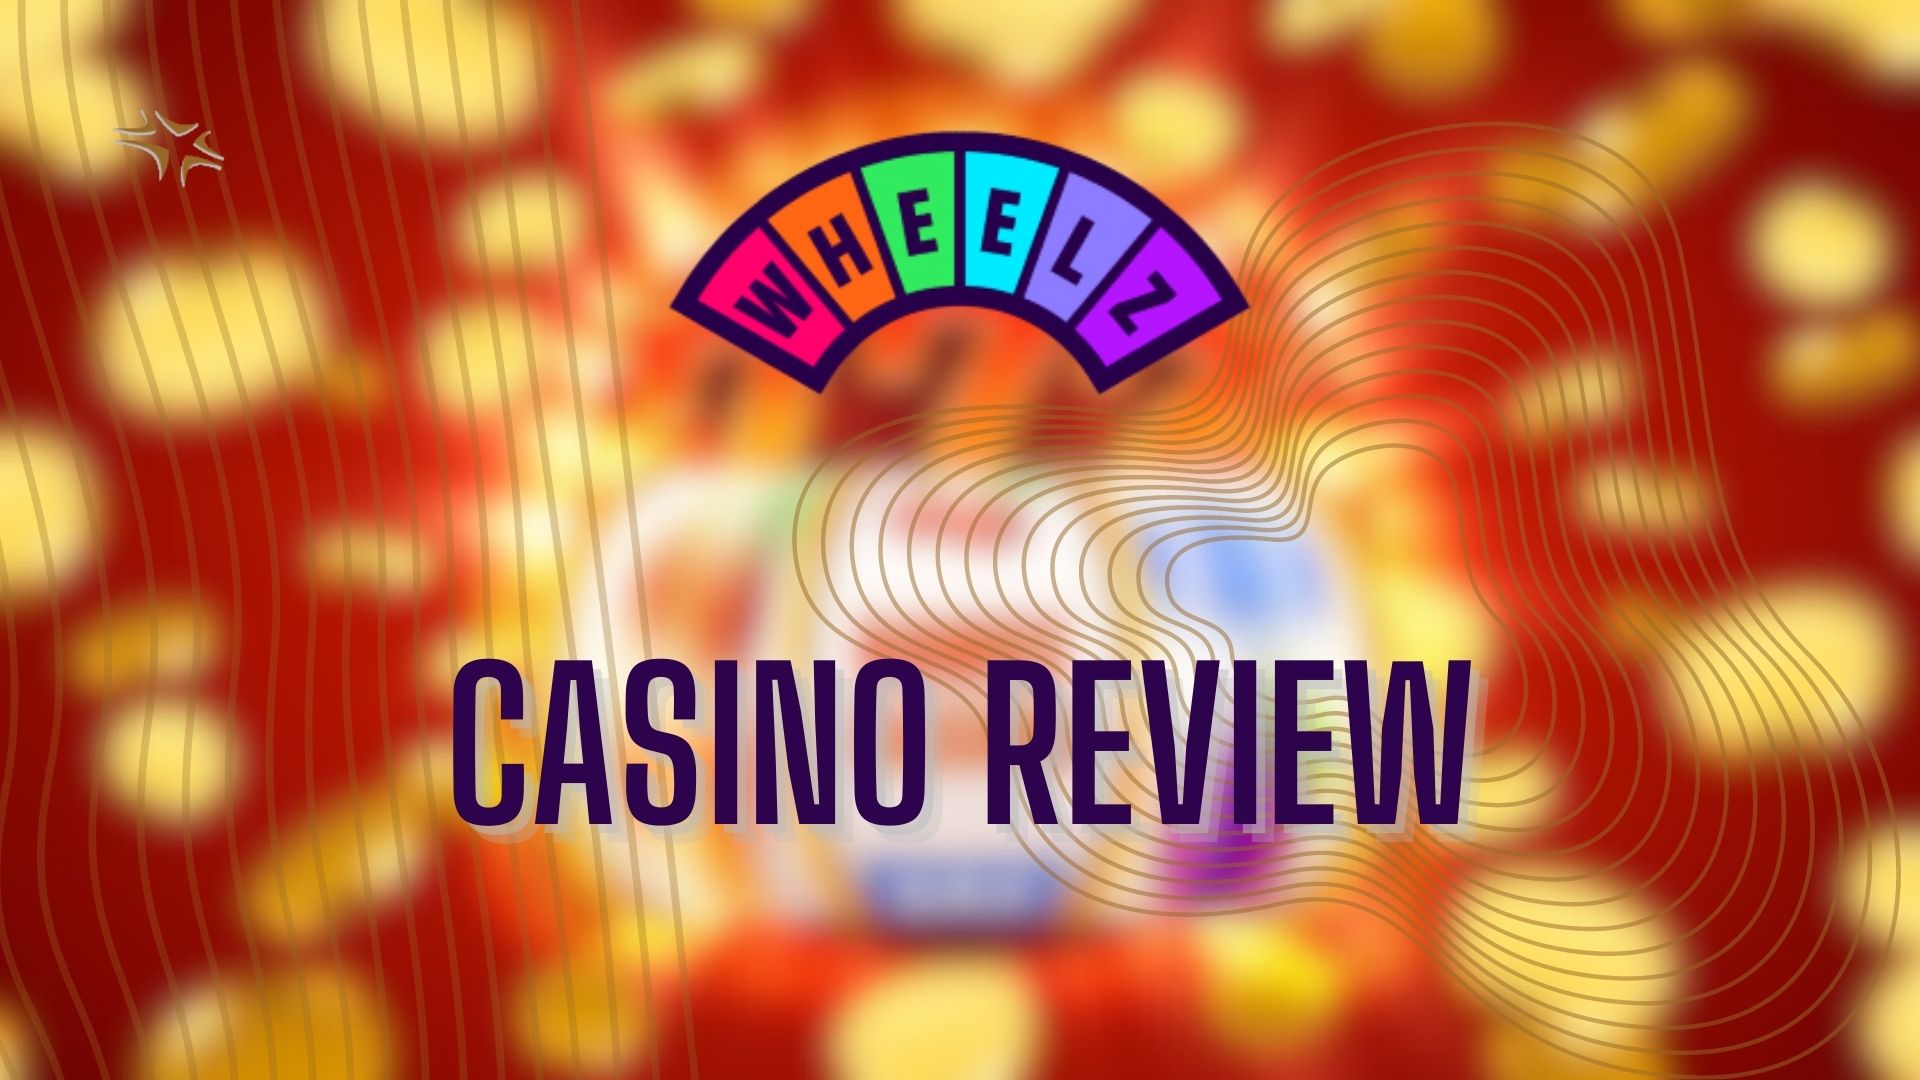 Wheelz casino review